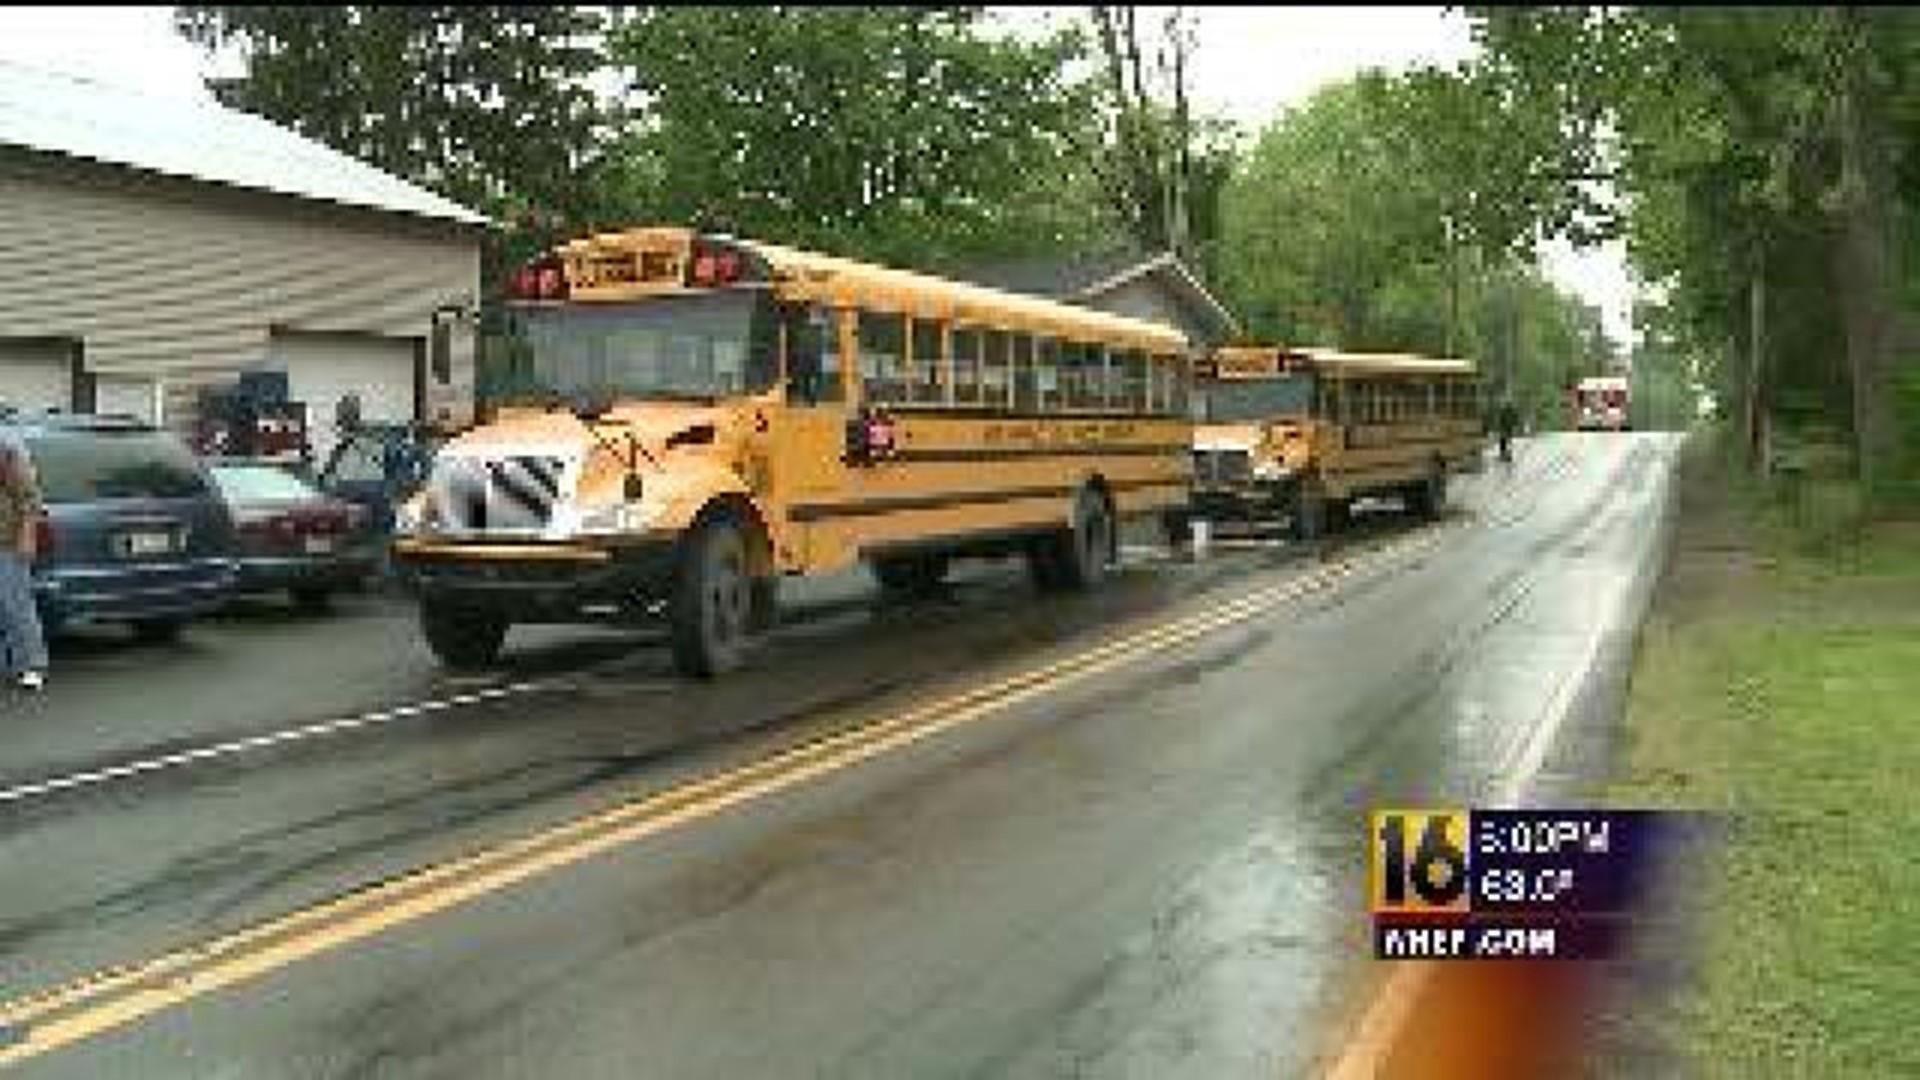 Students Hurt in Bus Crash